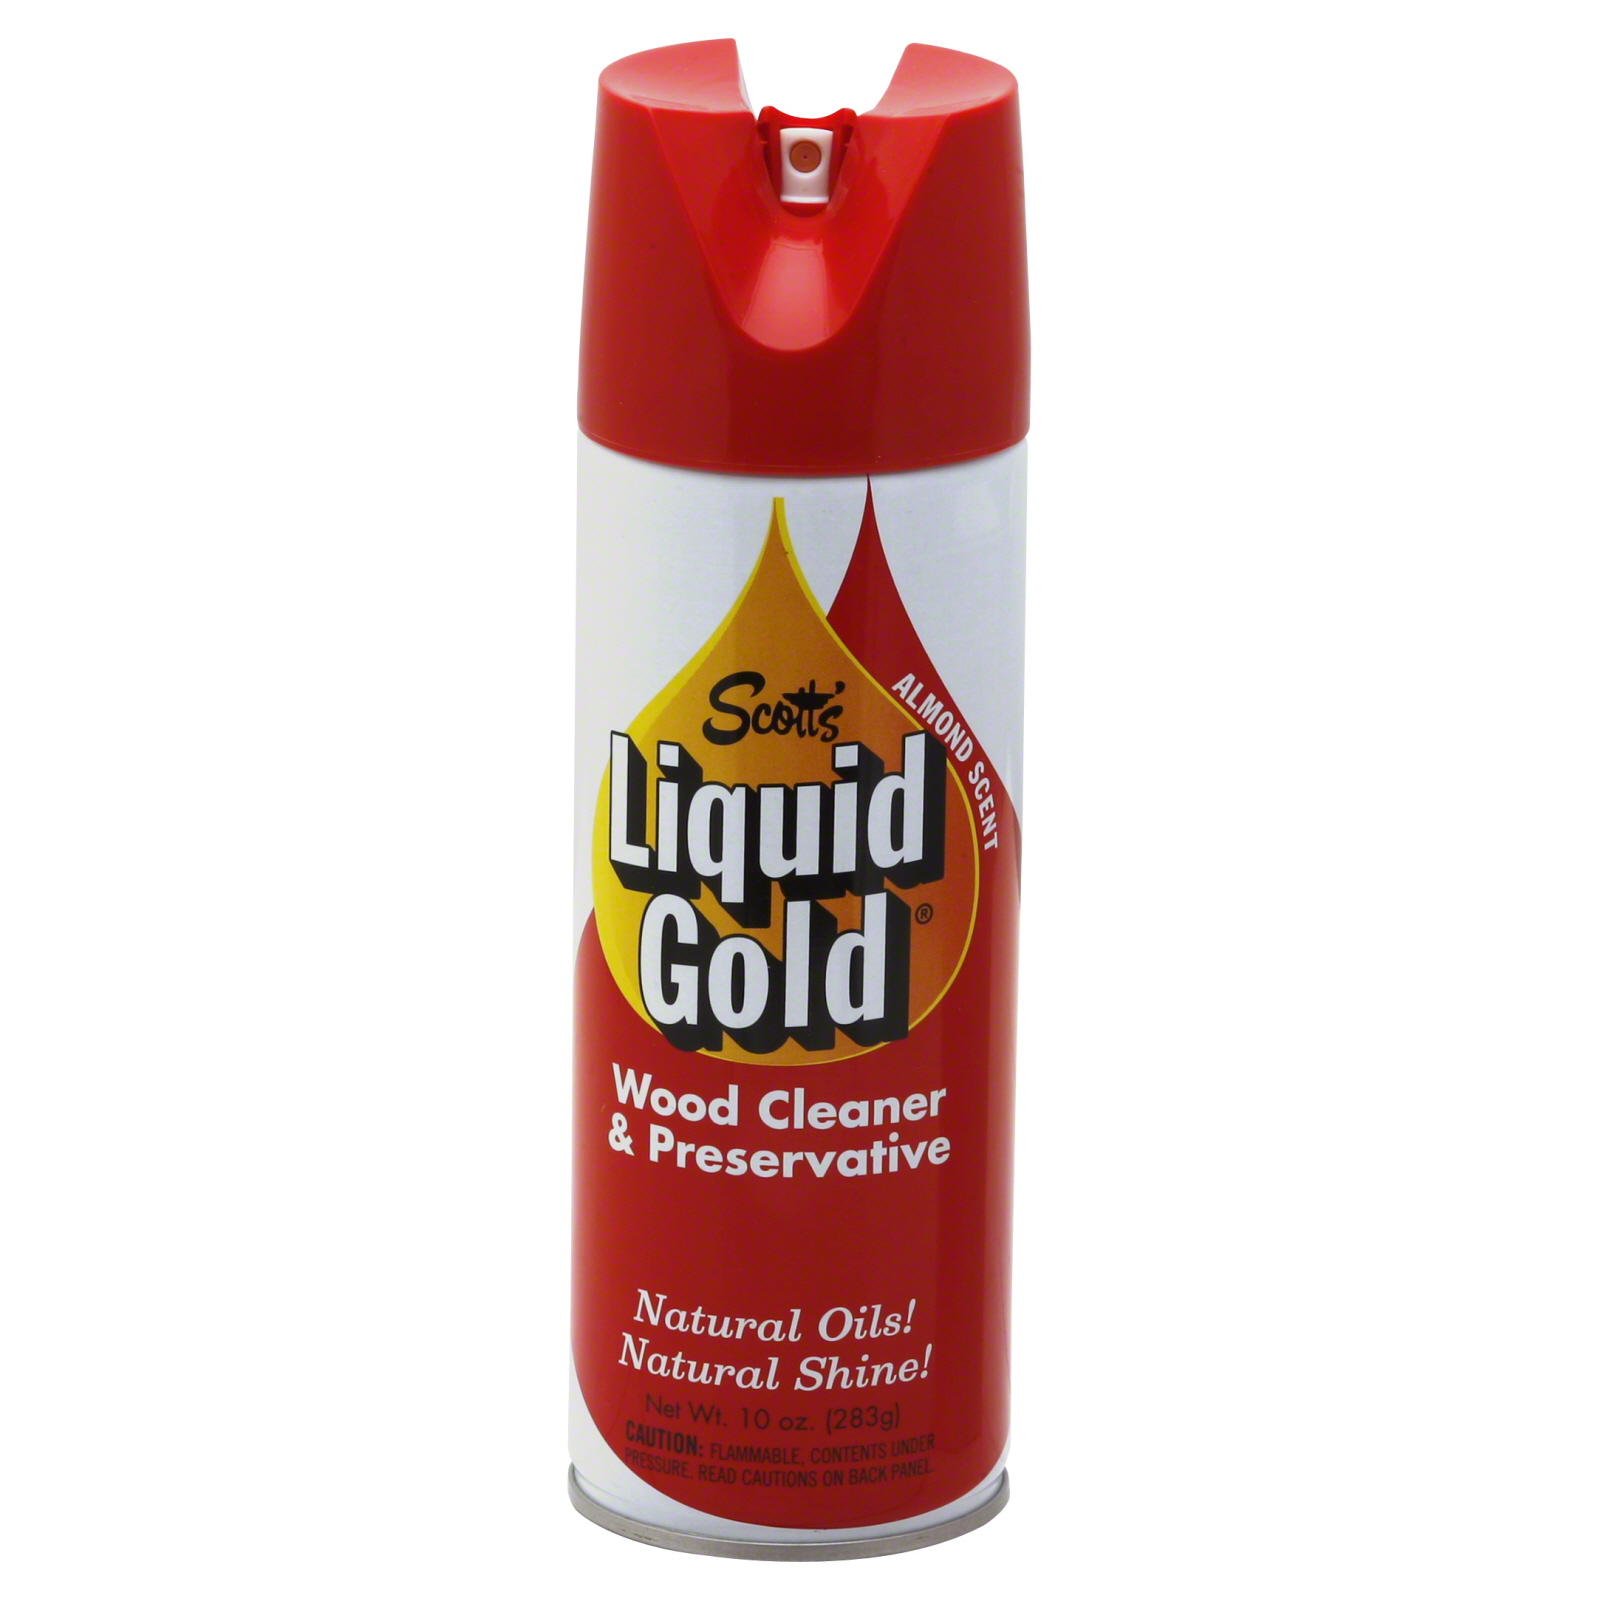 Scott's Liquid Gold Wood Cleaner Almond Aerosol, 10 oz (283 g)